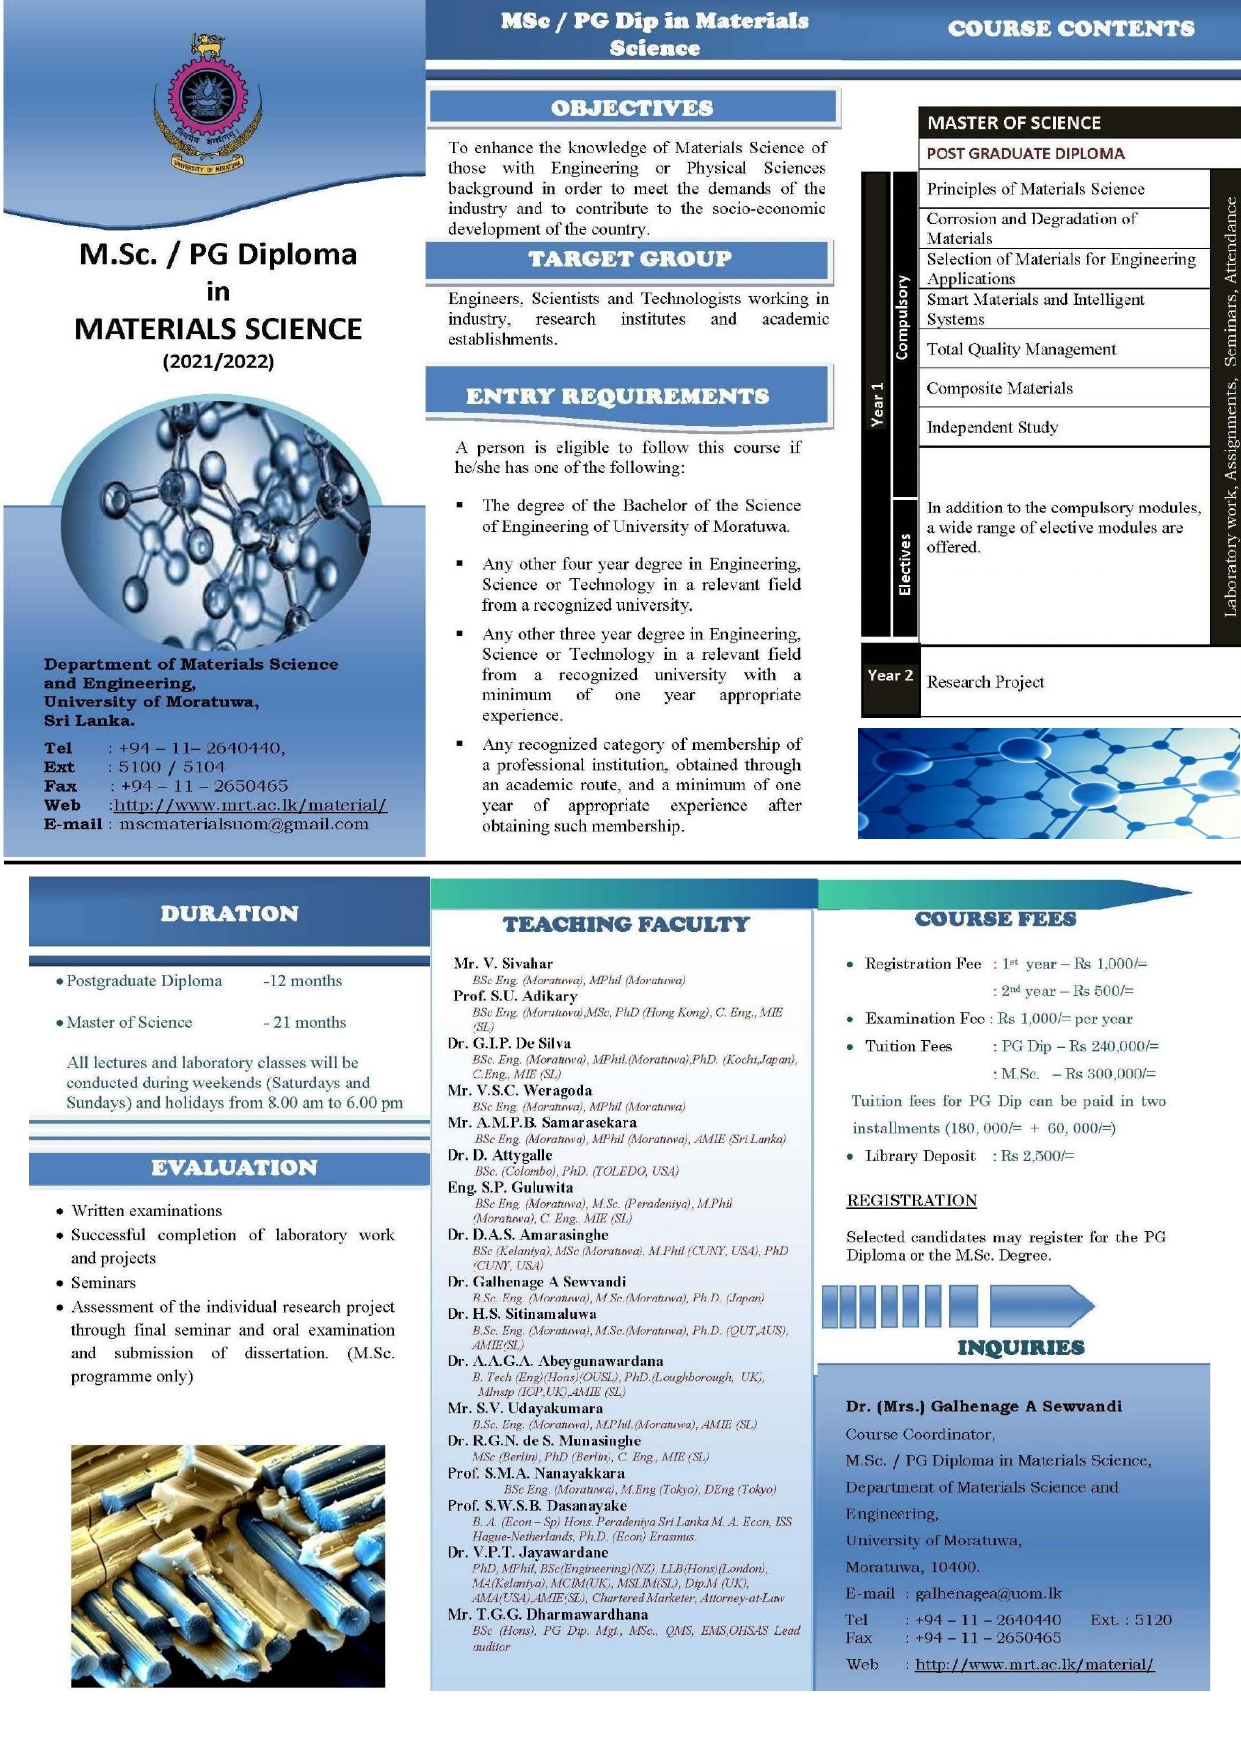 MSc/PG Diploma in Materials Science 2021/2022